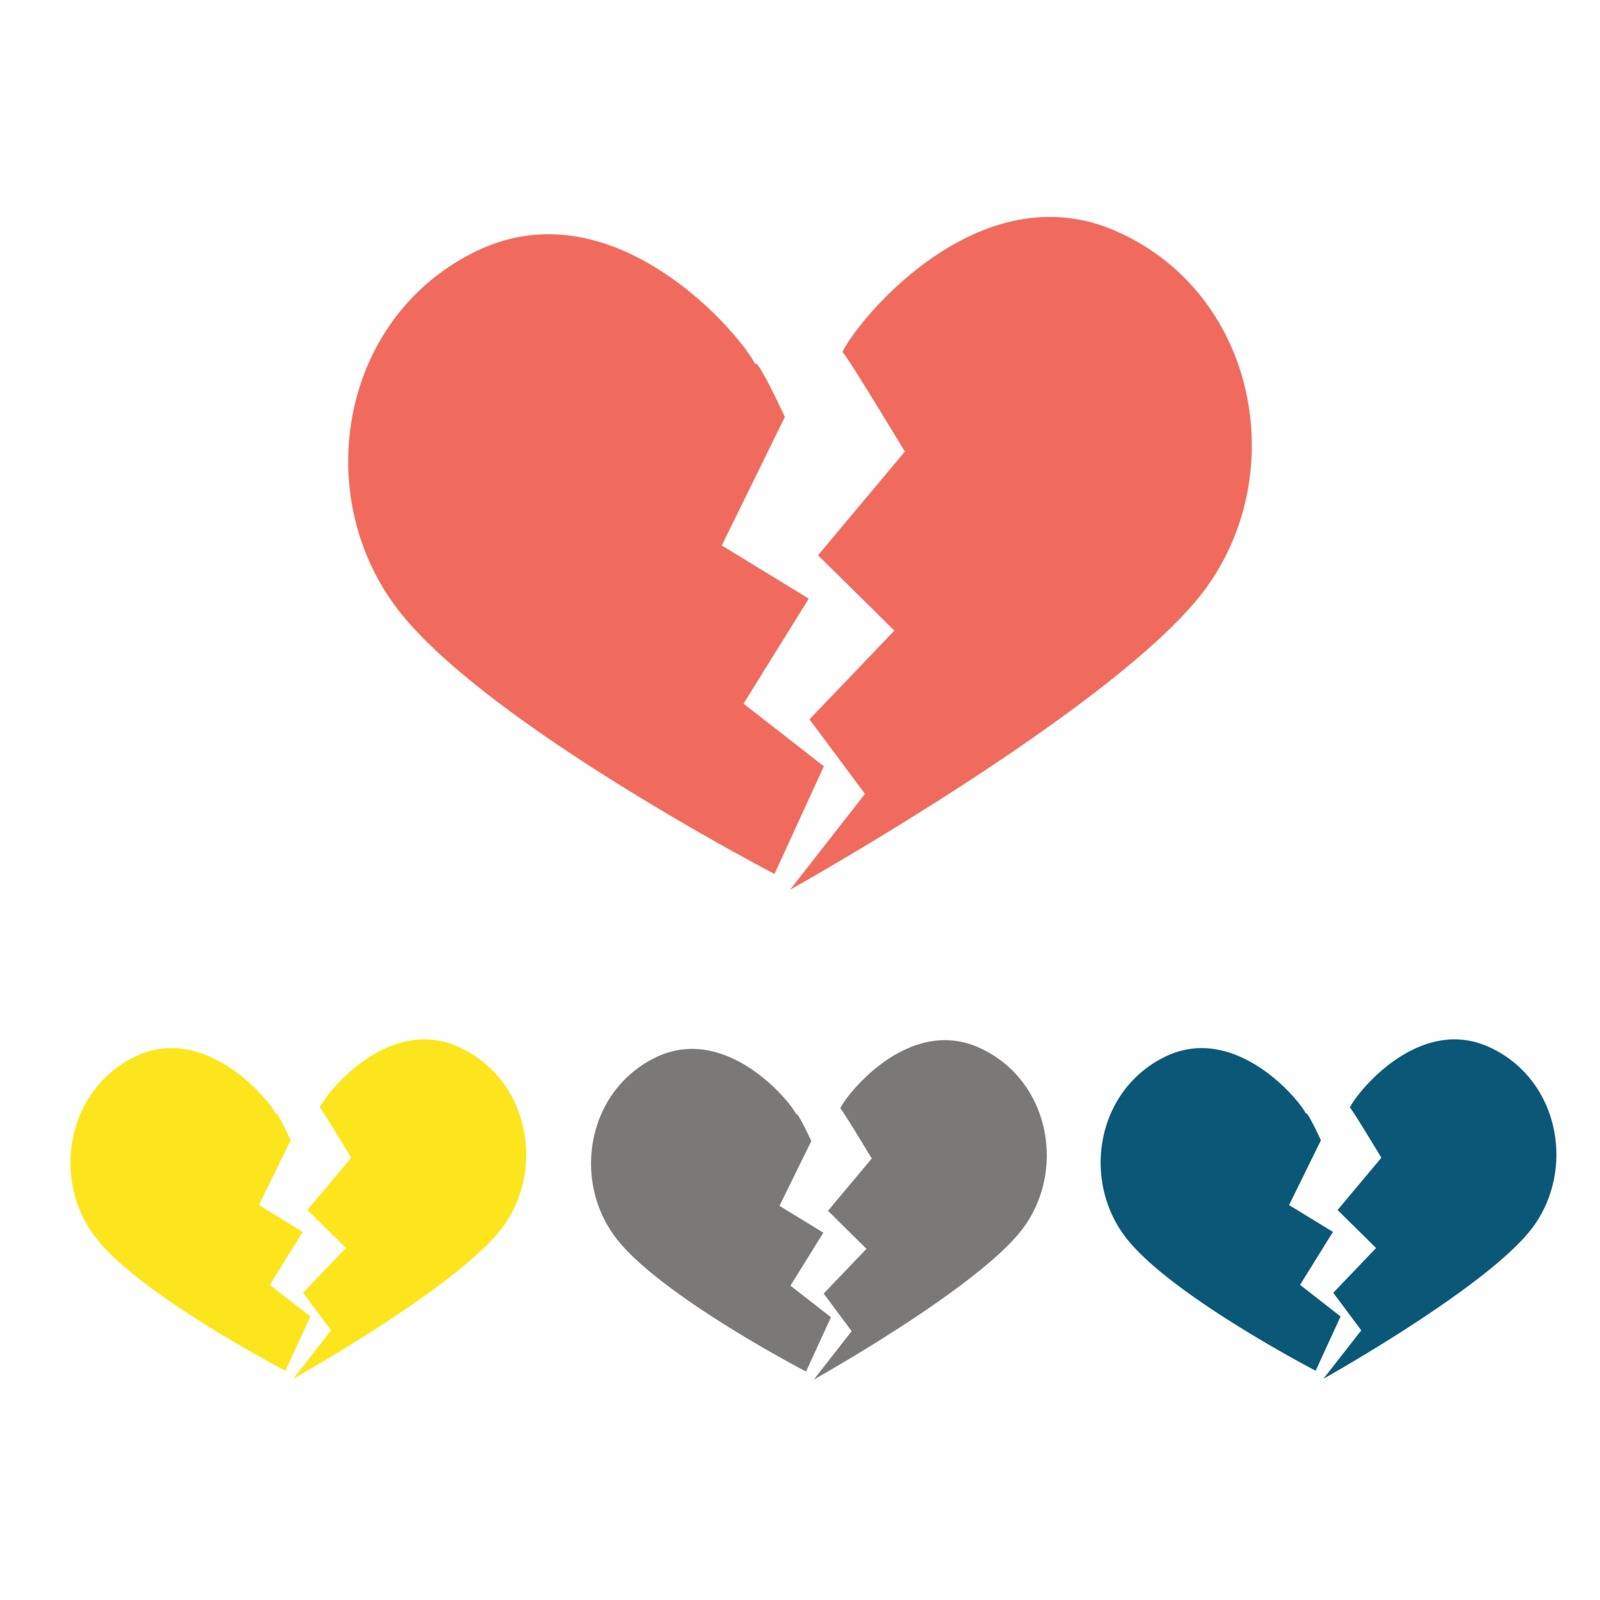 Heartbreak / broken heart or divorce flat icon for apps and webs by doraclub